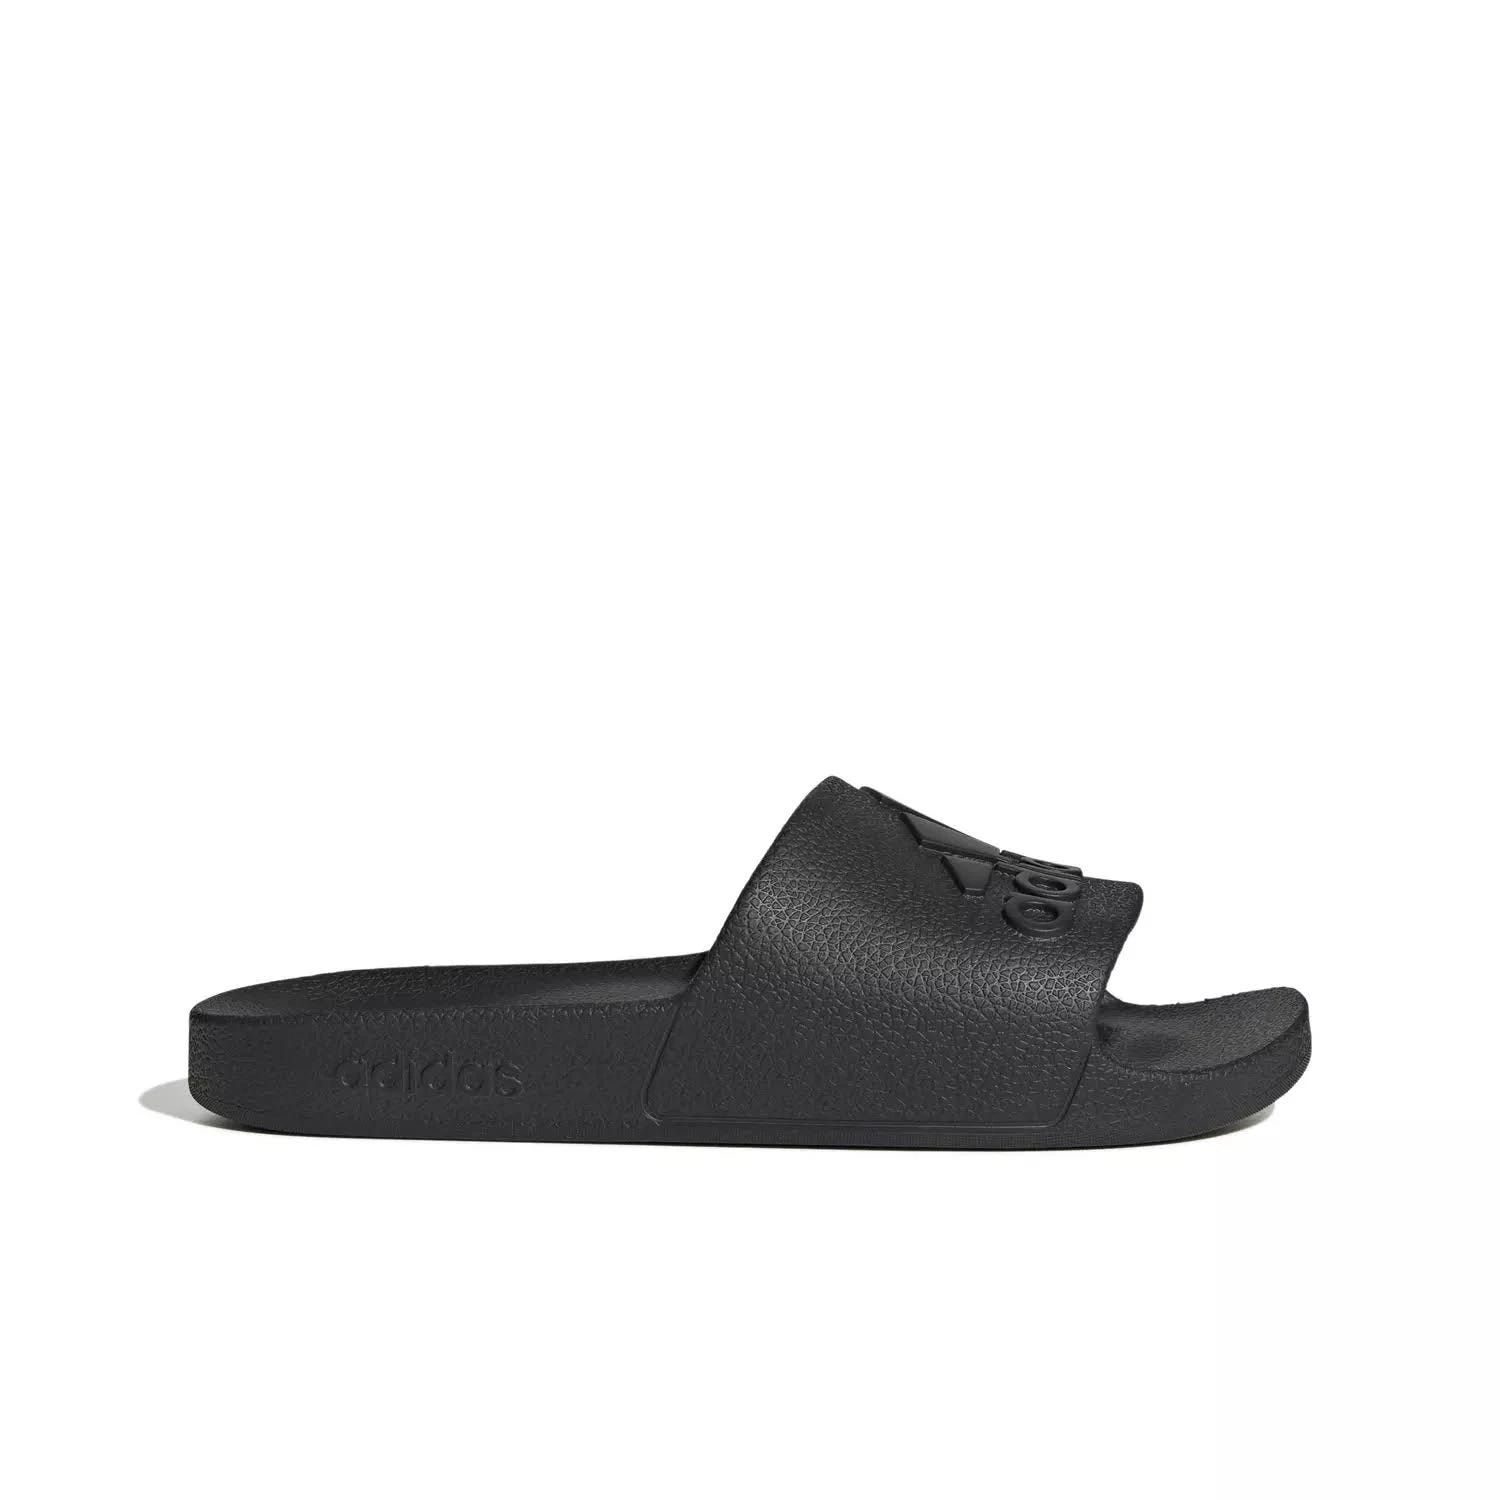 Comfy Slip-On Synthetic Sandal Slides for Men Women | Image